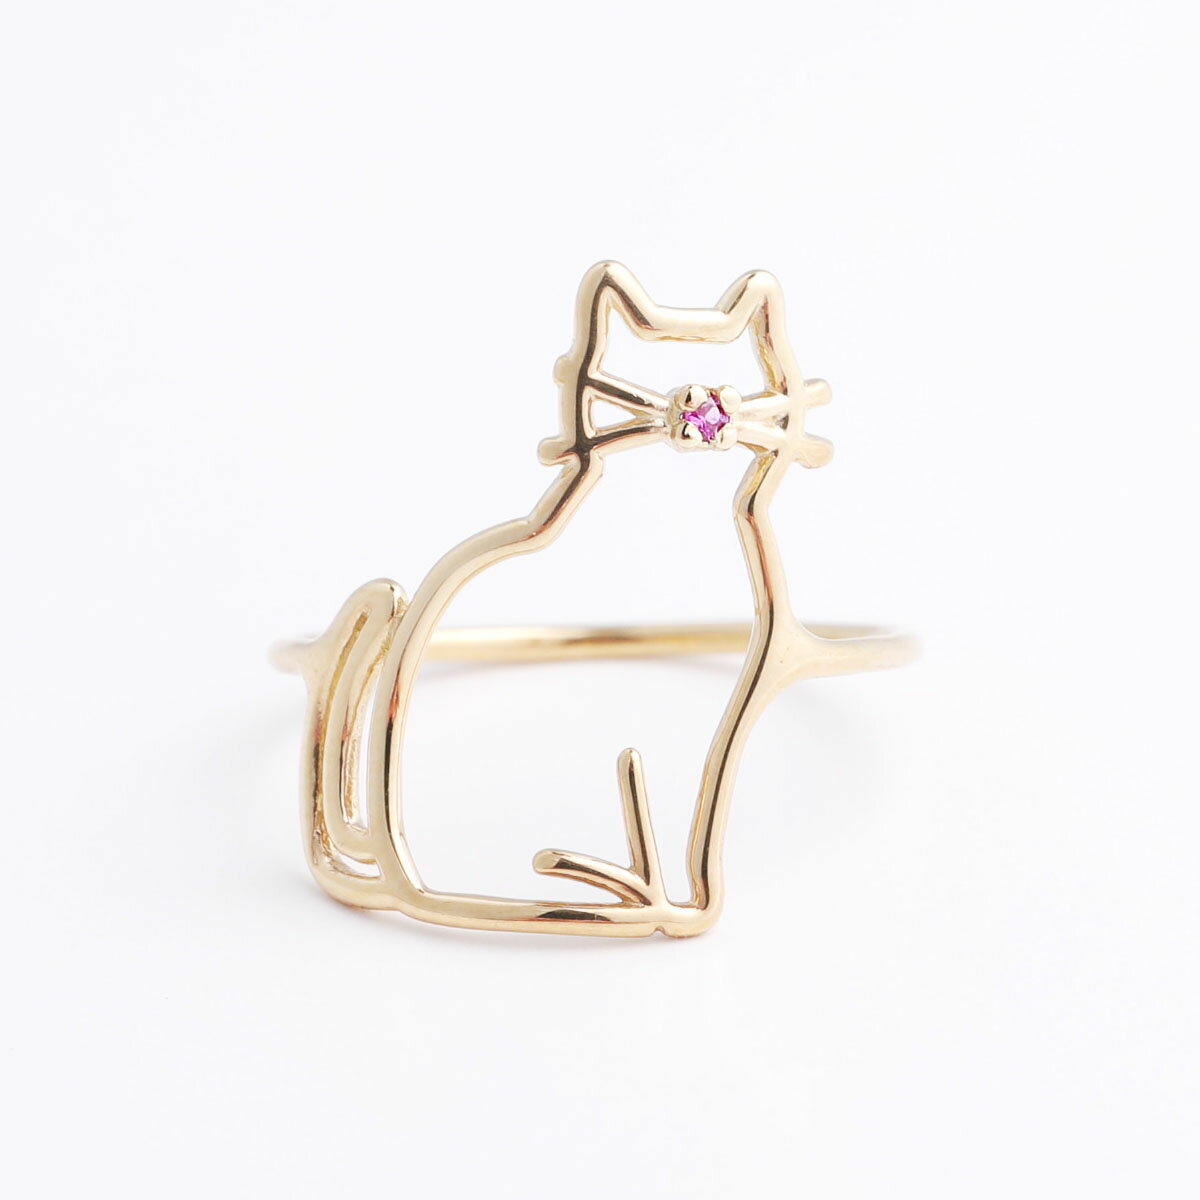 ALIITA アリータ リング MIAU ZAFIRO ROSA RING レディース 猫 モチーフ キャット ピンクサファイア 指輪 アクセサリー YELLOW-GOLD-9KT